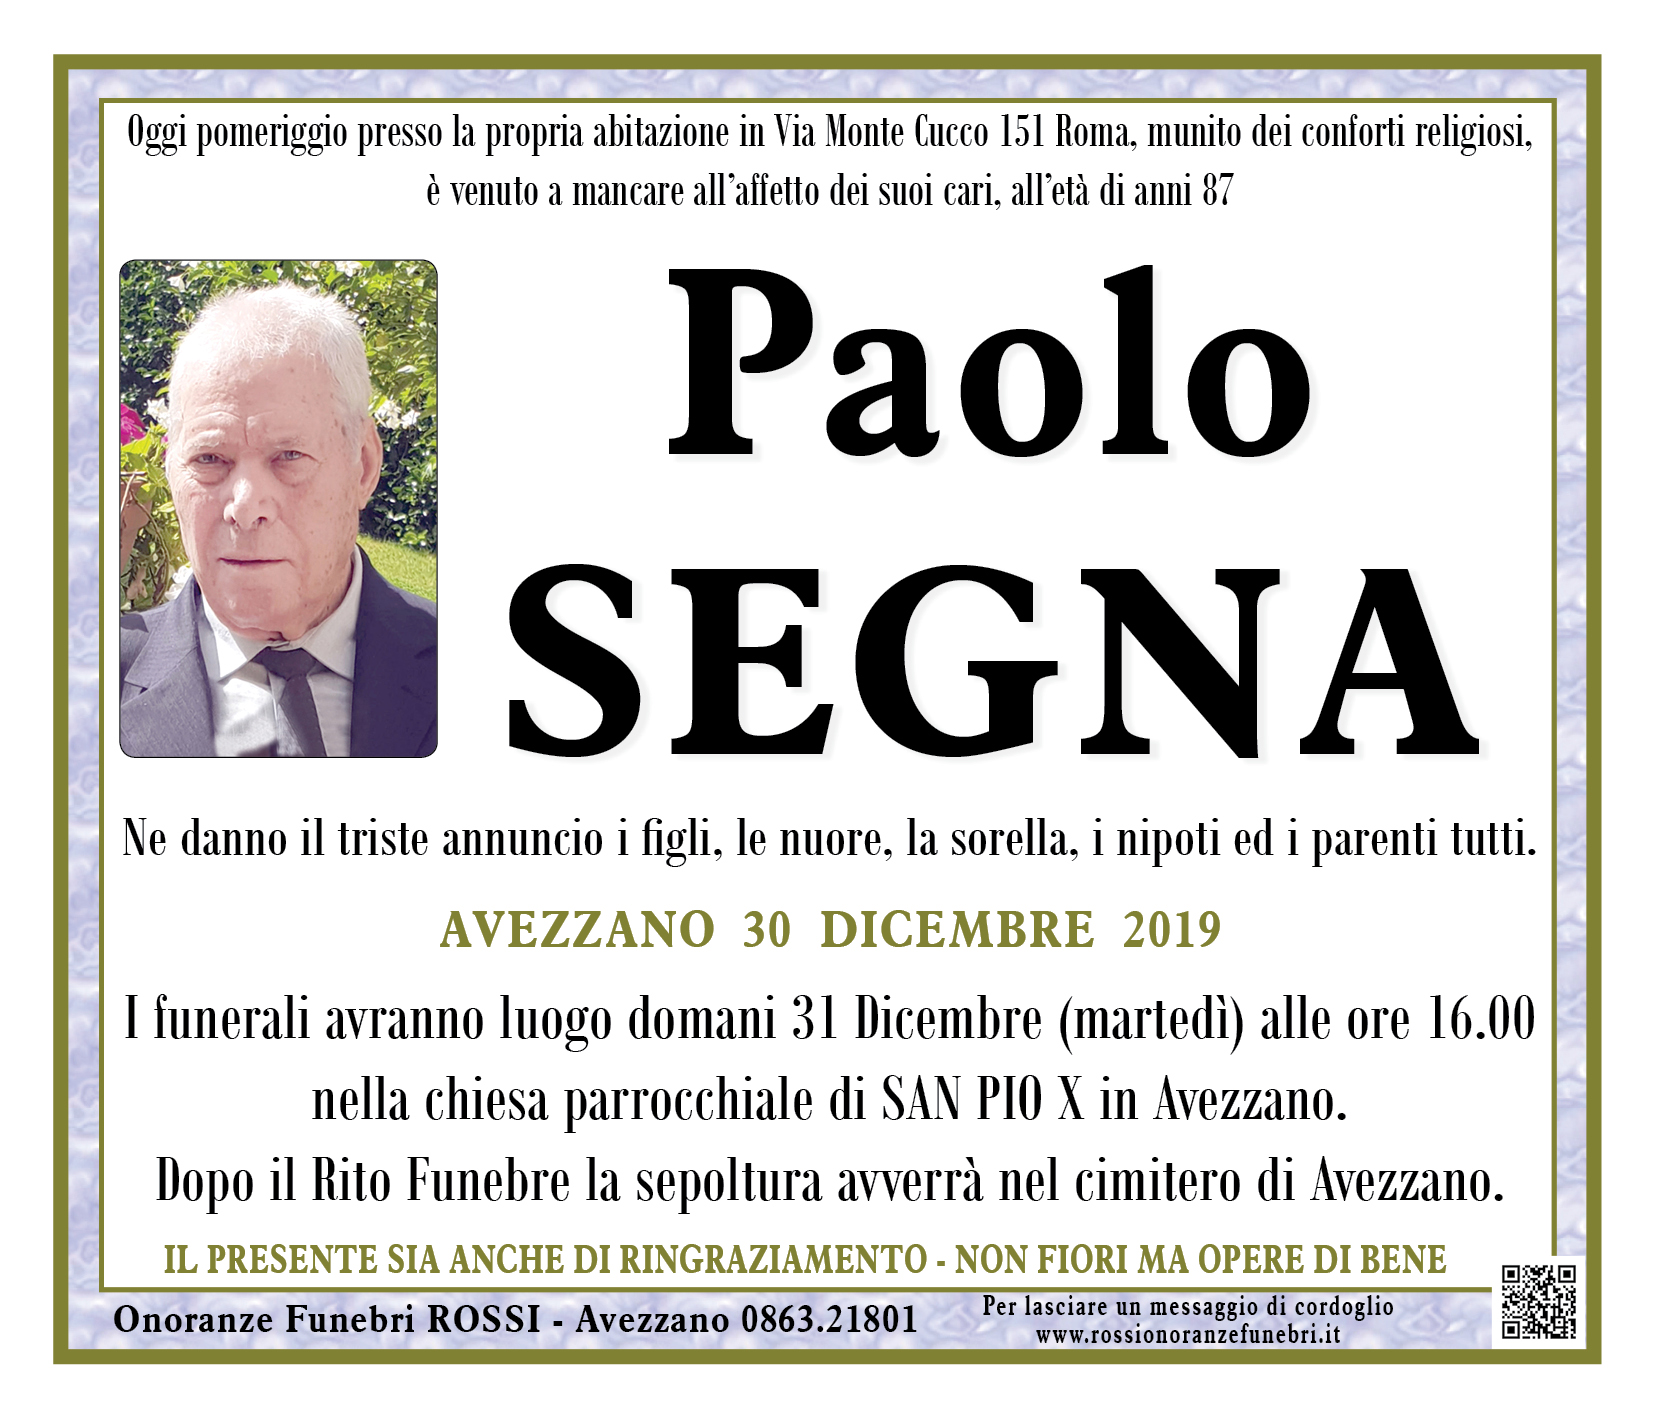 Paolo Segna